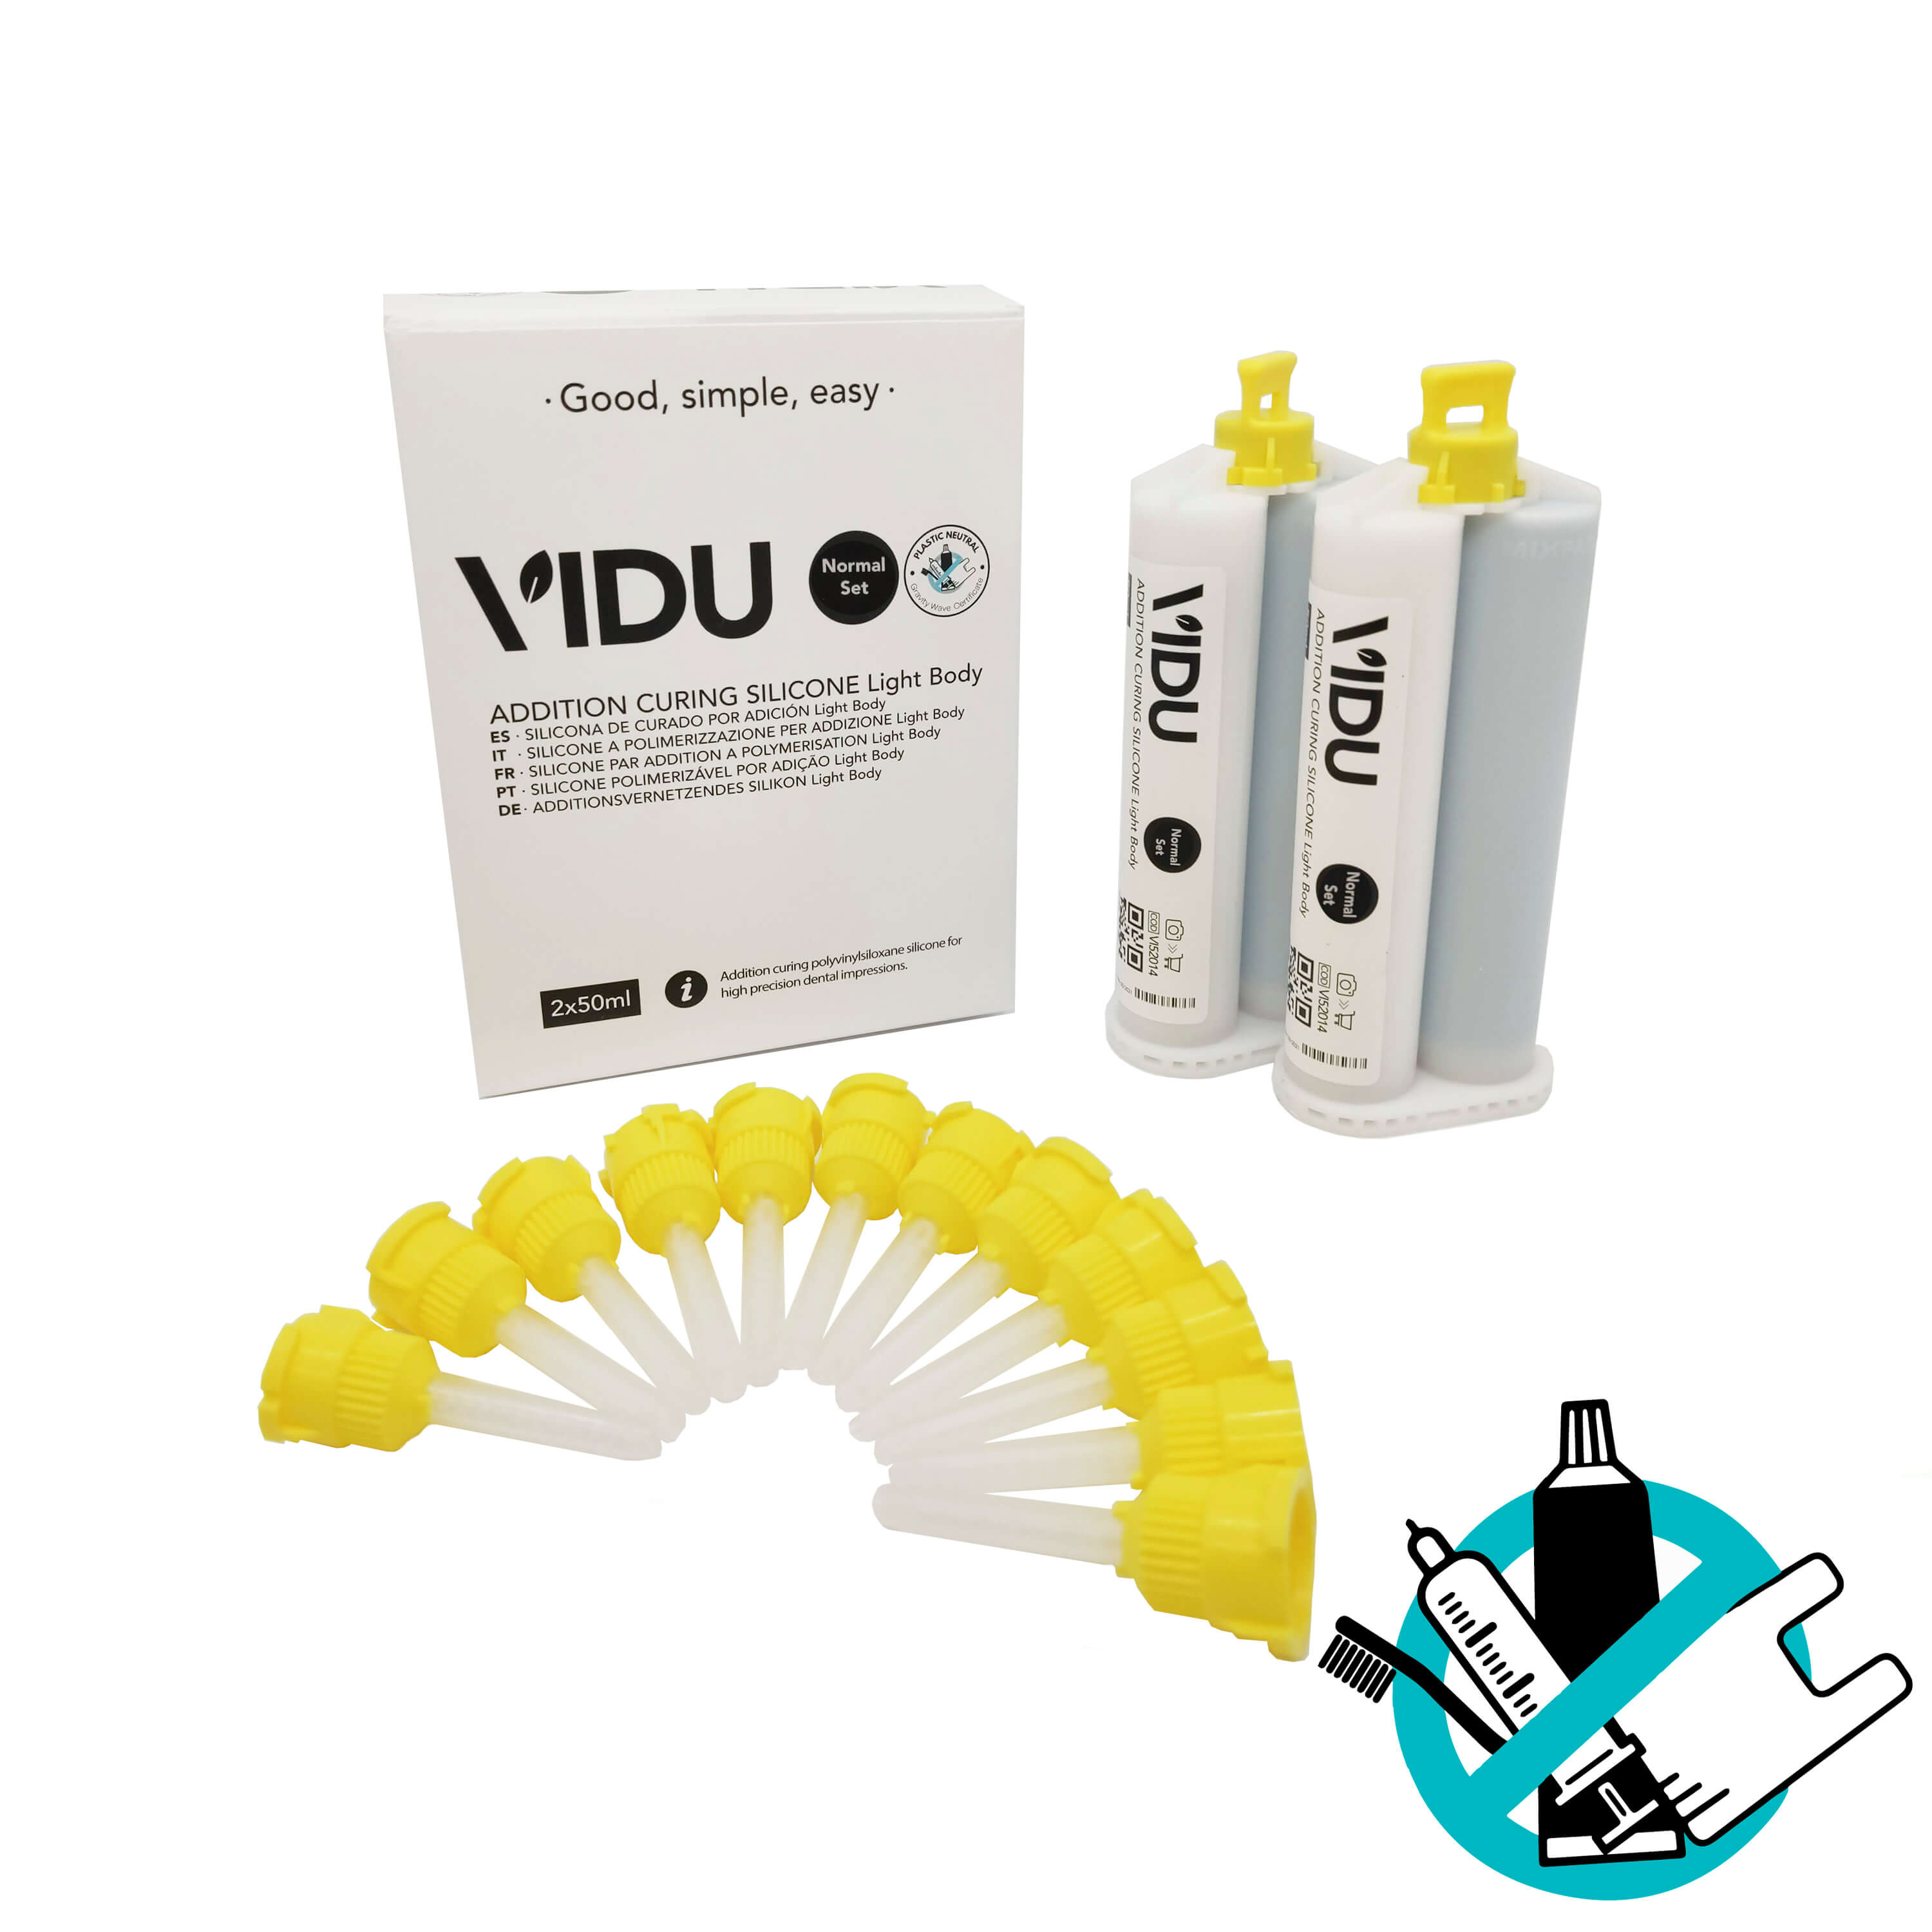 VIDU light body addition silicone